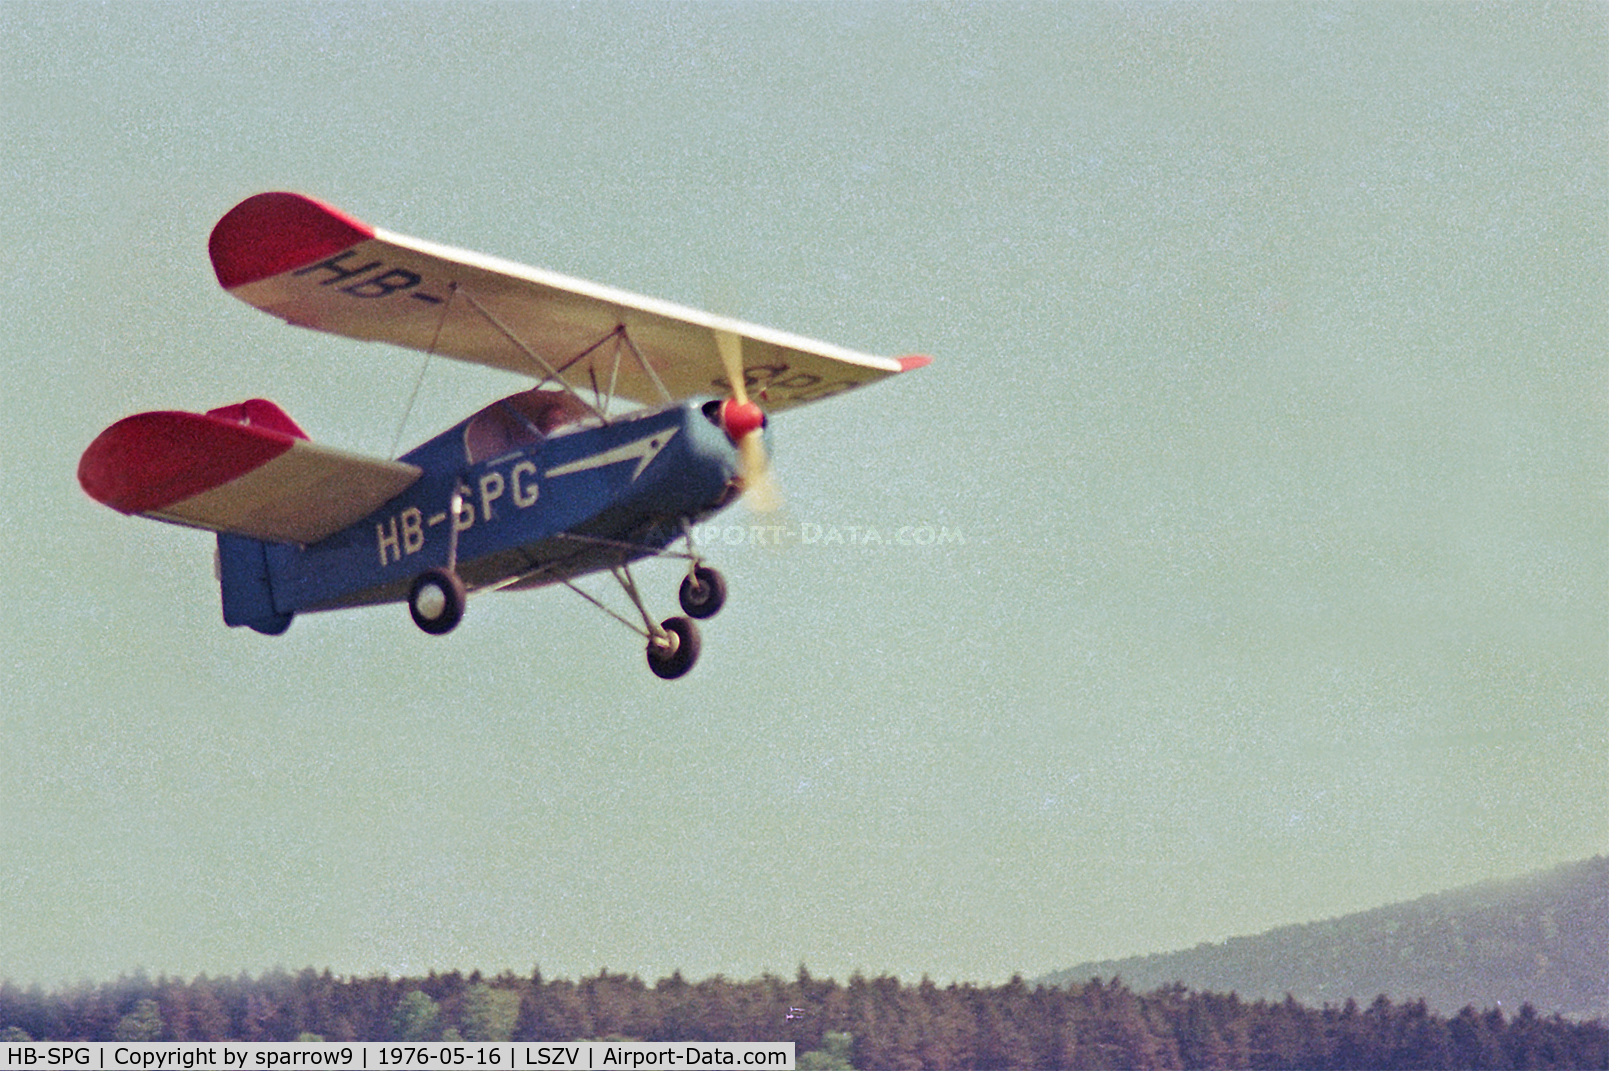 HB-SPG, 1969 Mignet HM.19C Pou-du-Ciel C/N 01, At Sitterdorf airfield. Scanned from a negative.Now in a German Aircraft Museum as D-EPOU